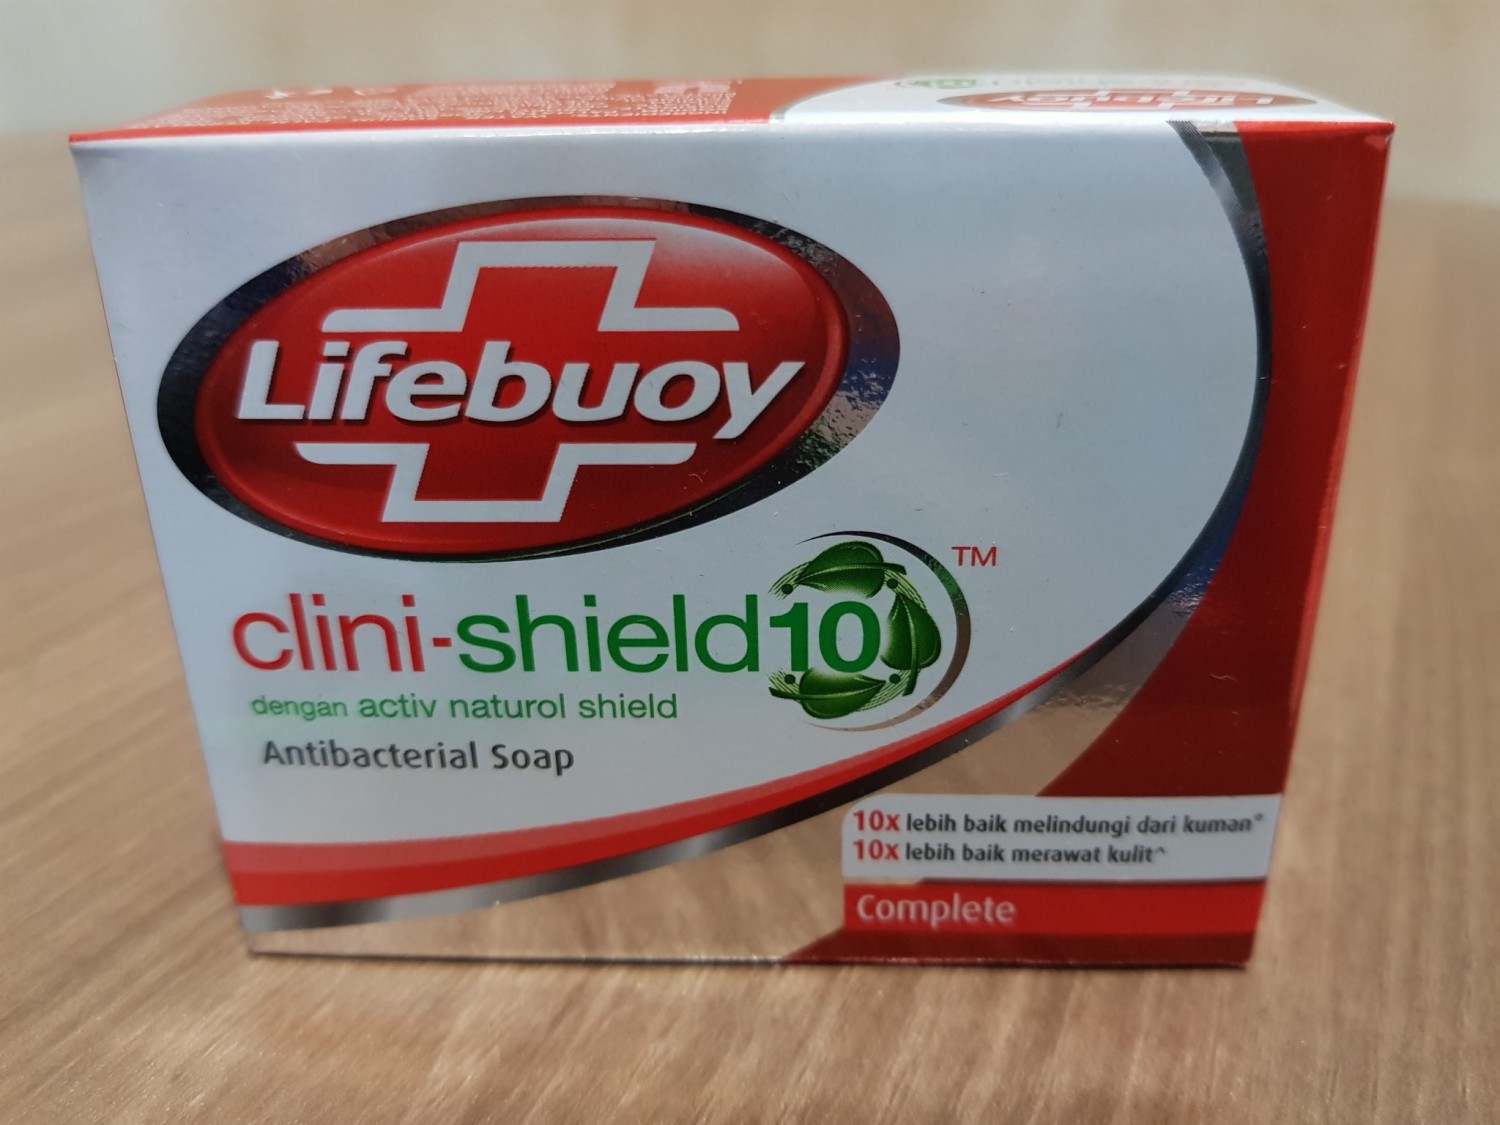 Lifebuoy Clini Shield 10 70g